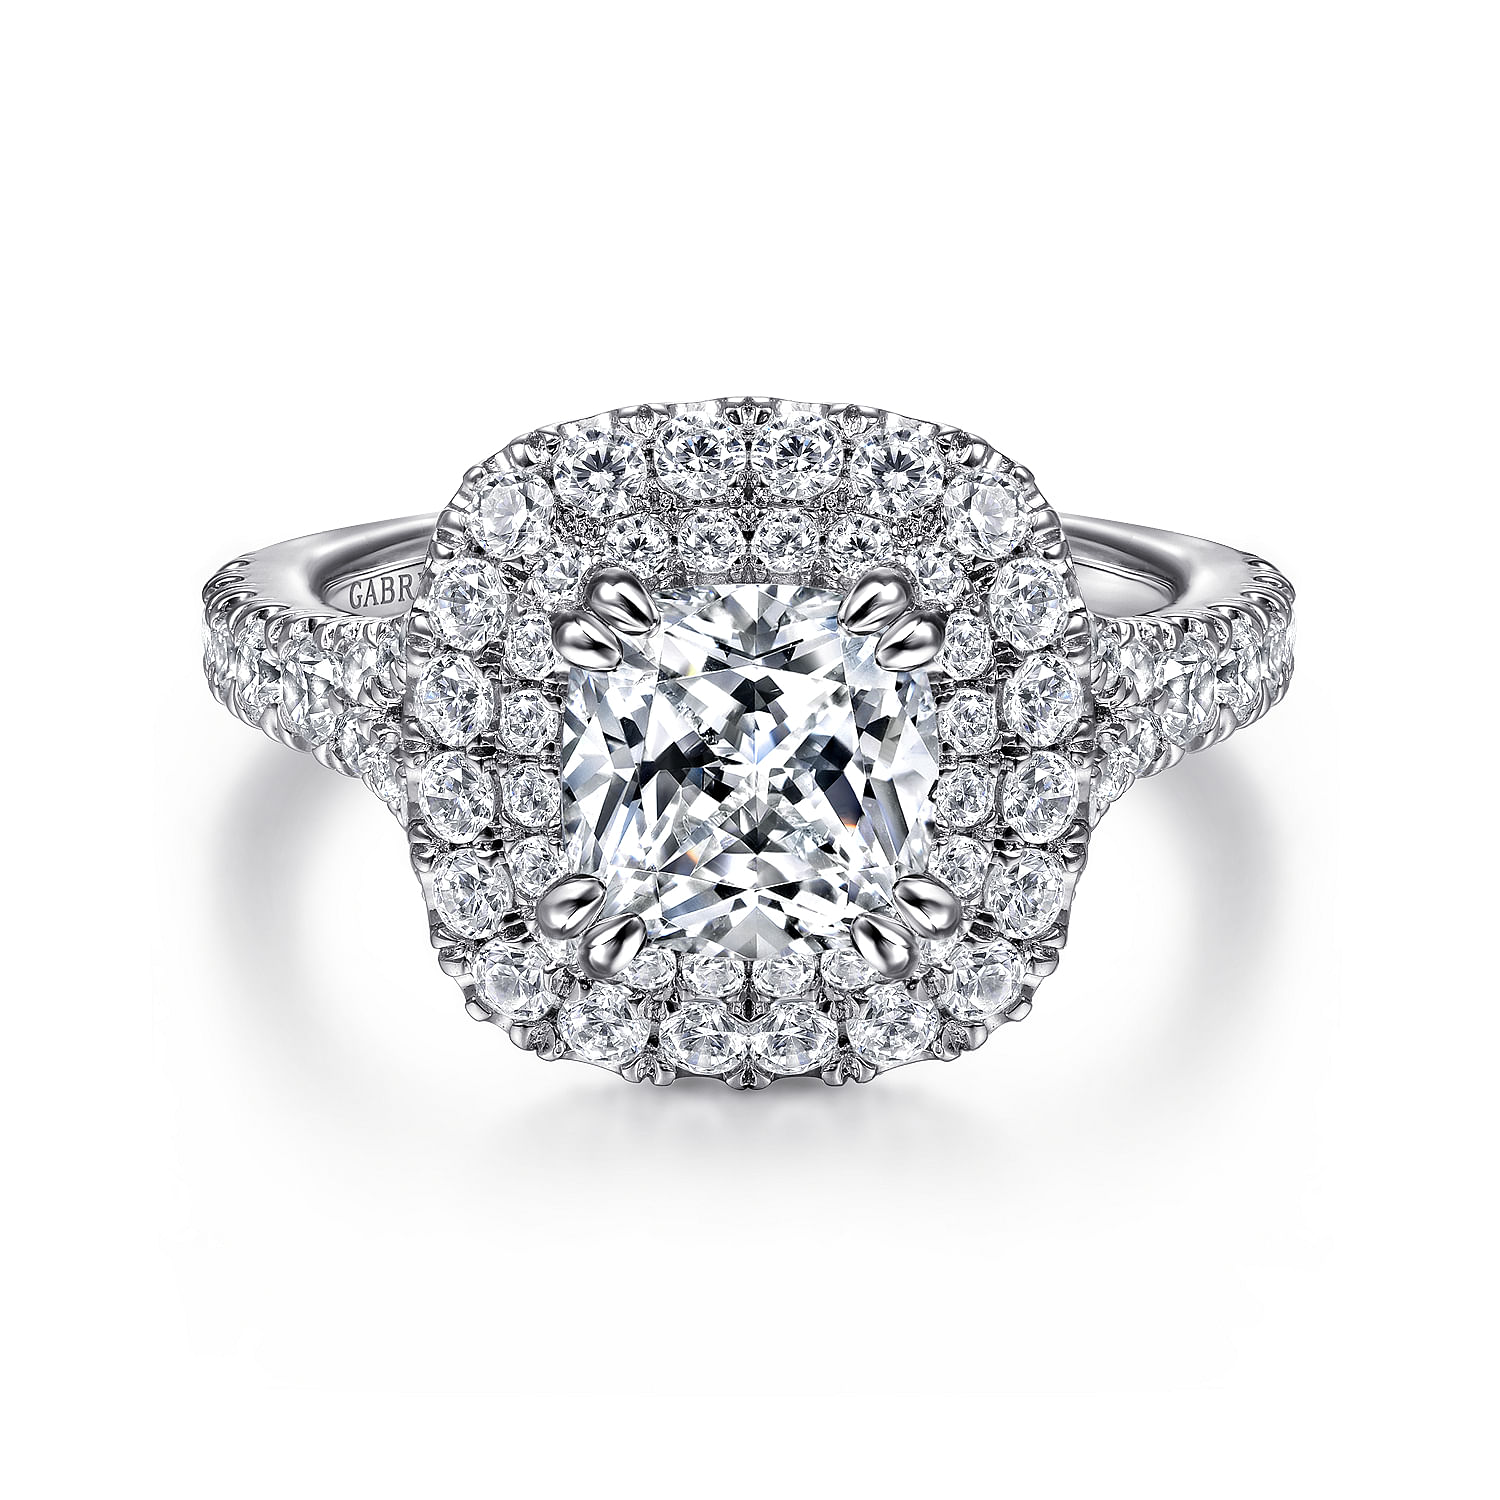 Sequoia - 14K White Gold Cushion Double Halo Diamond Engagement Ring